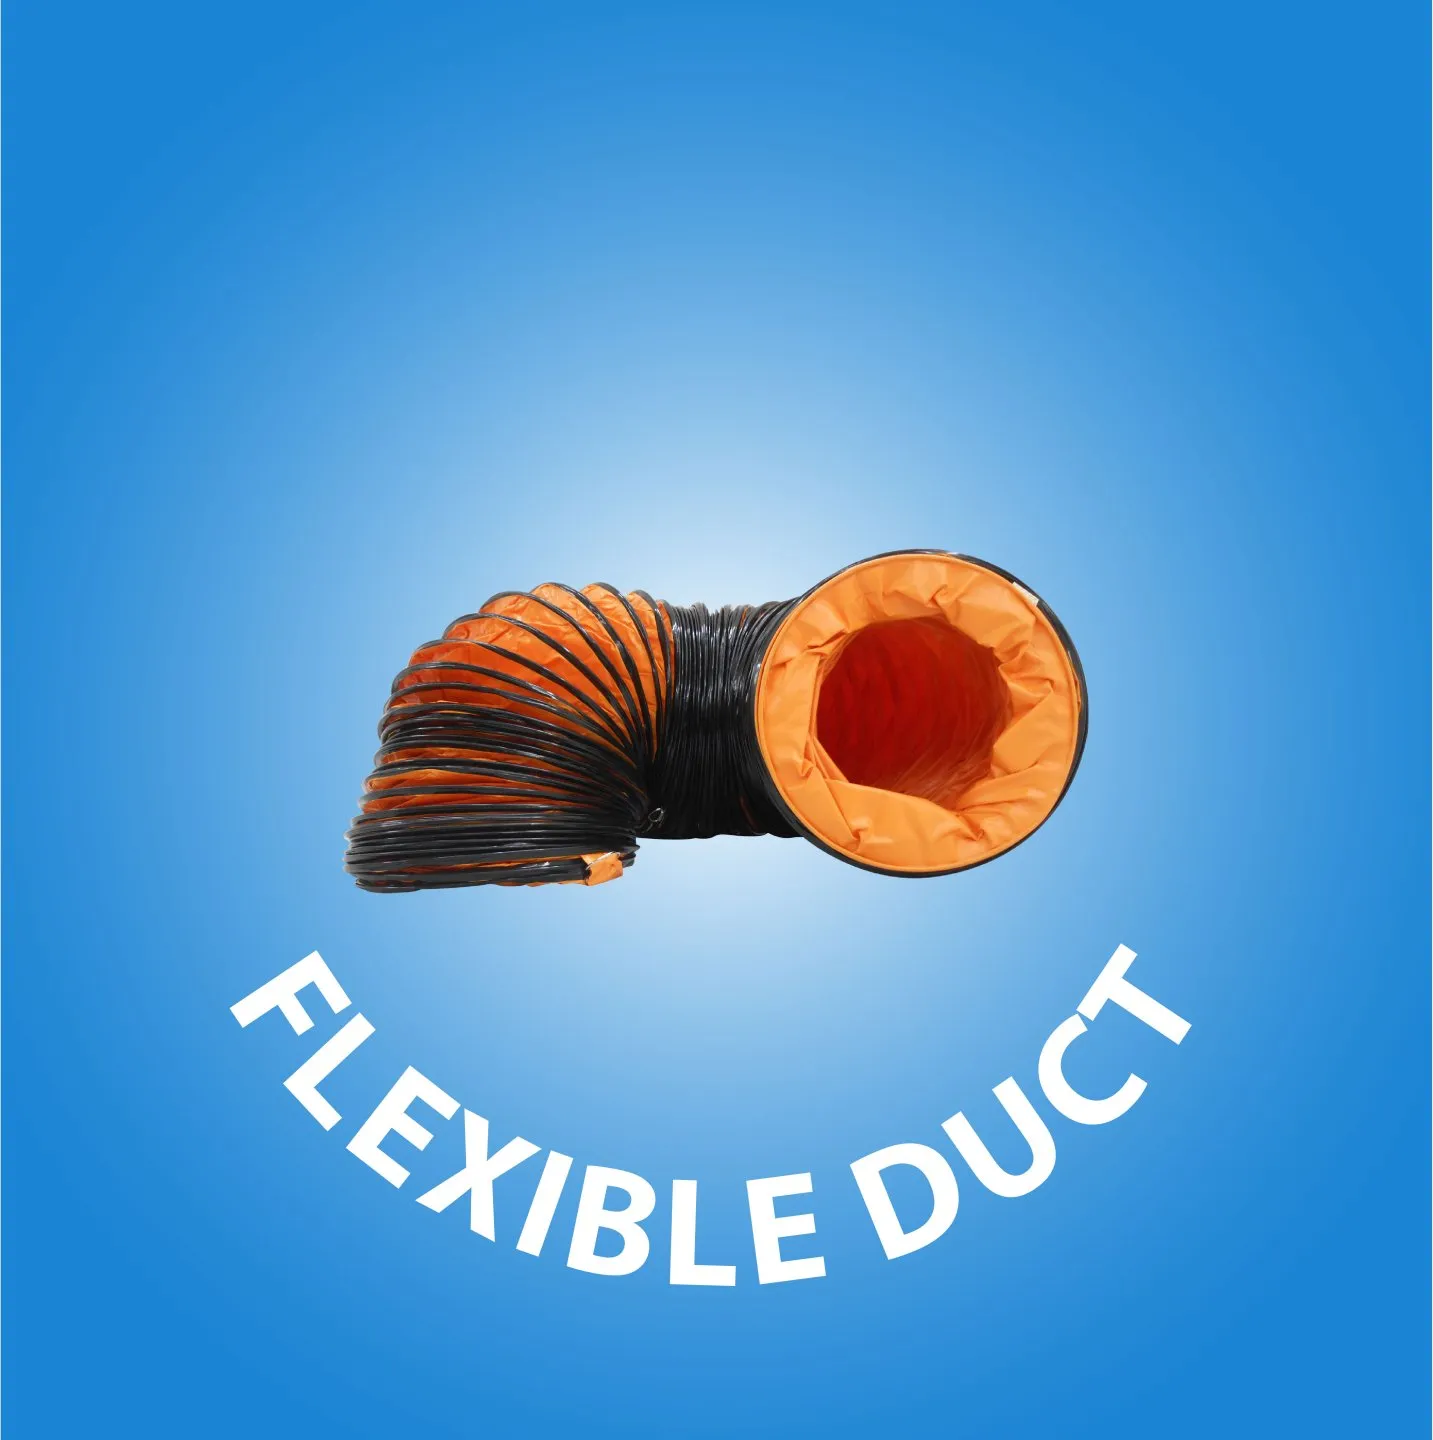  Flexible Duct cover kategori website 23